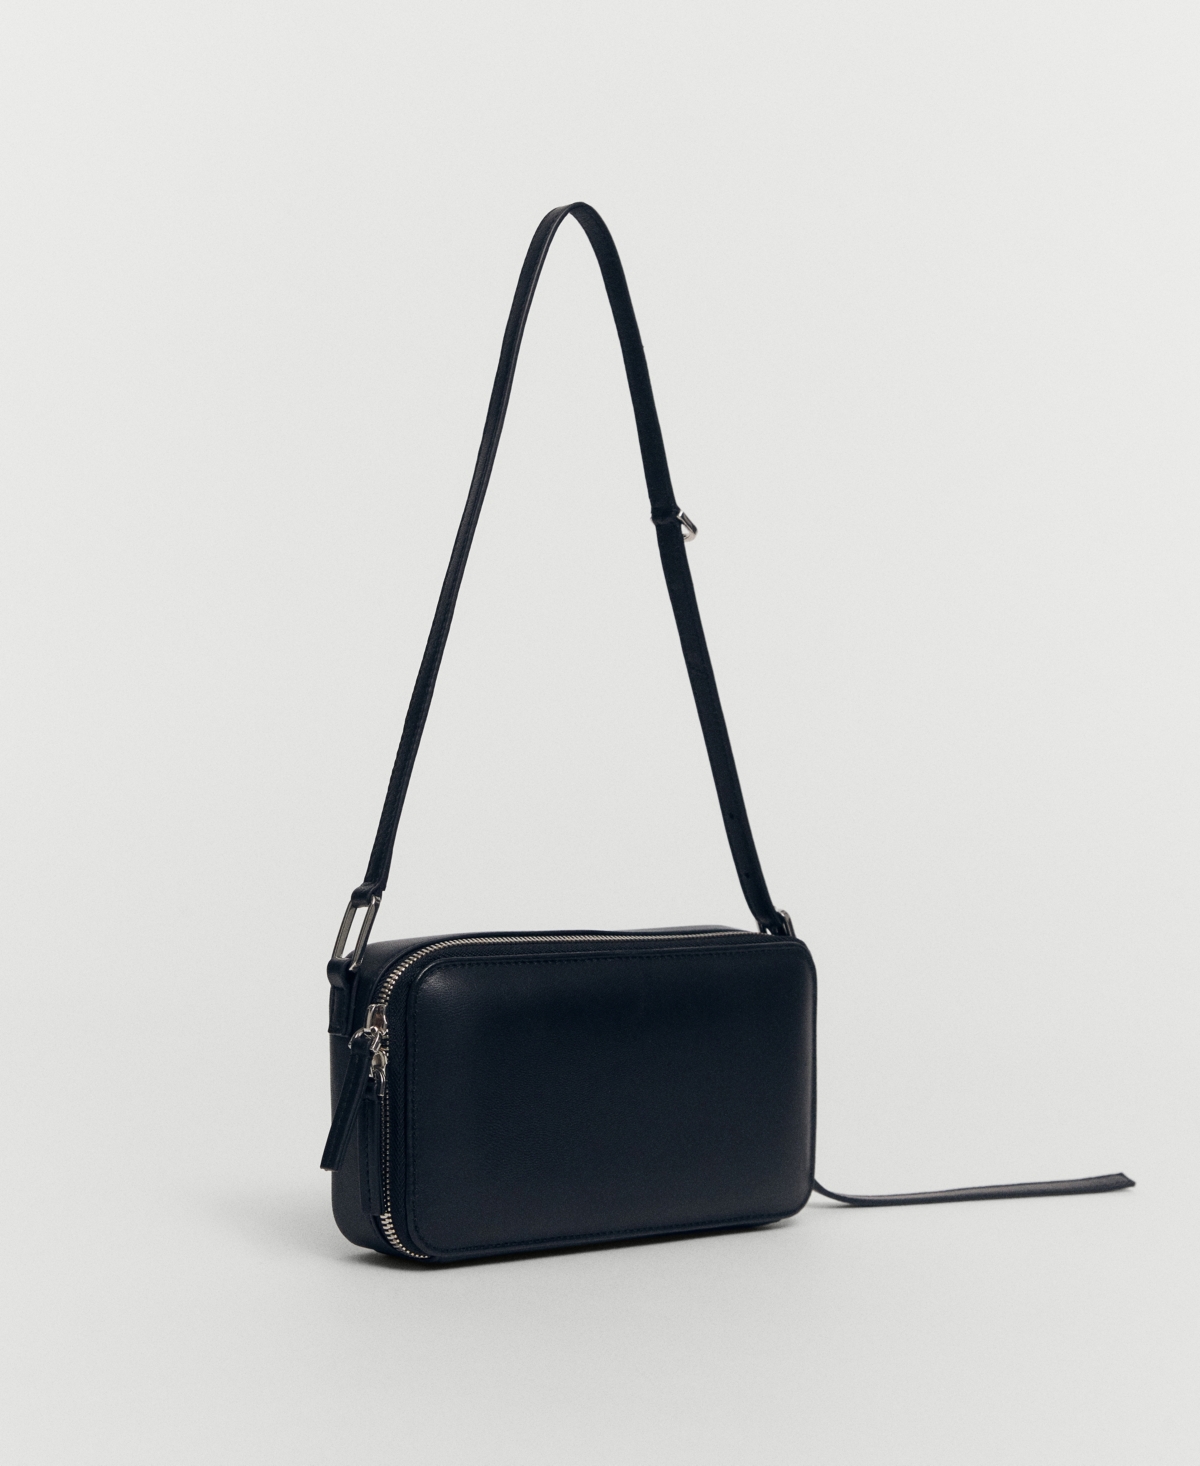 Mango Women's Rectangular Leather Handbag In Black